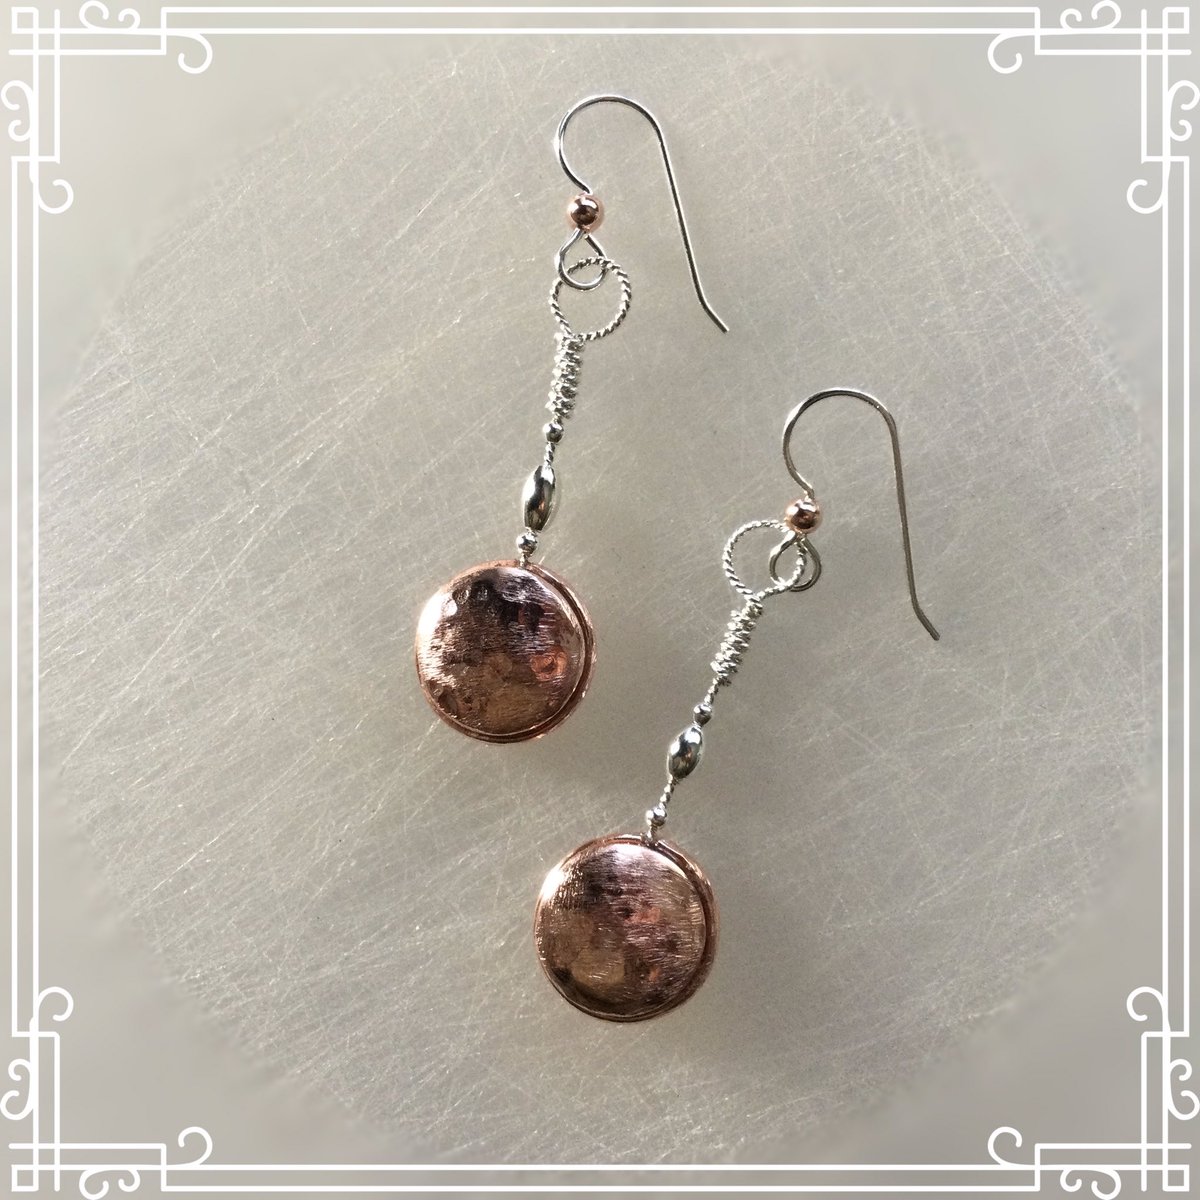 Hammered Copper Sterling Silver Earrings #earringsoftheweek #mothersdaygiftideas #earrings #jewelrydesigner #jewelrylover